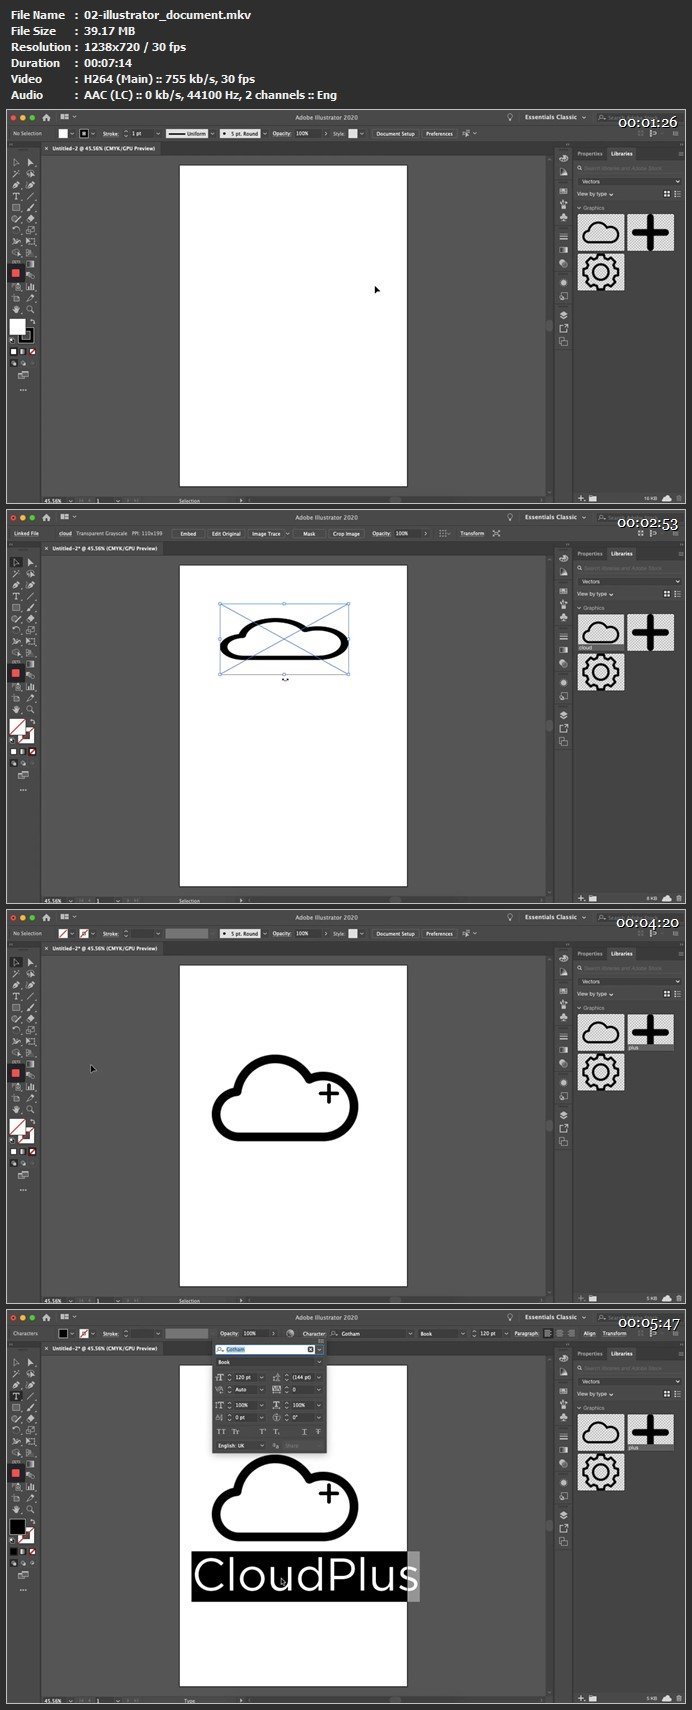 Adobe Illustrator CC - Essentials MasterClass